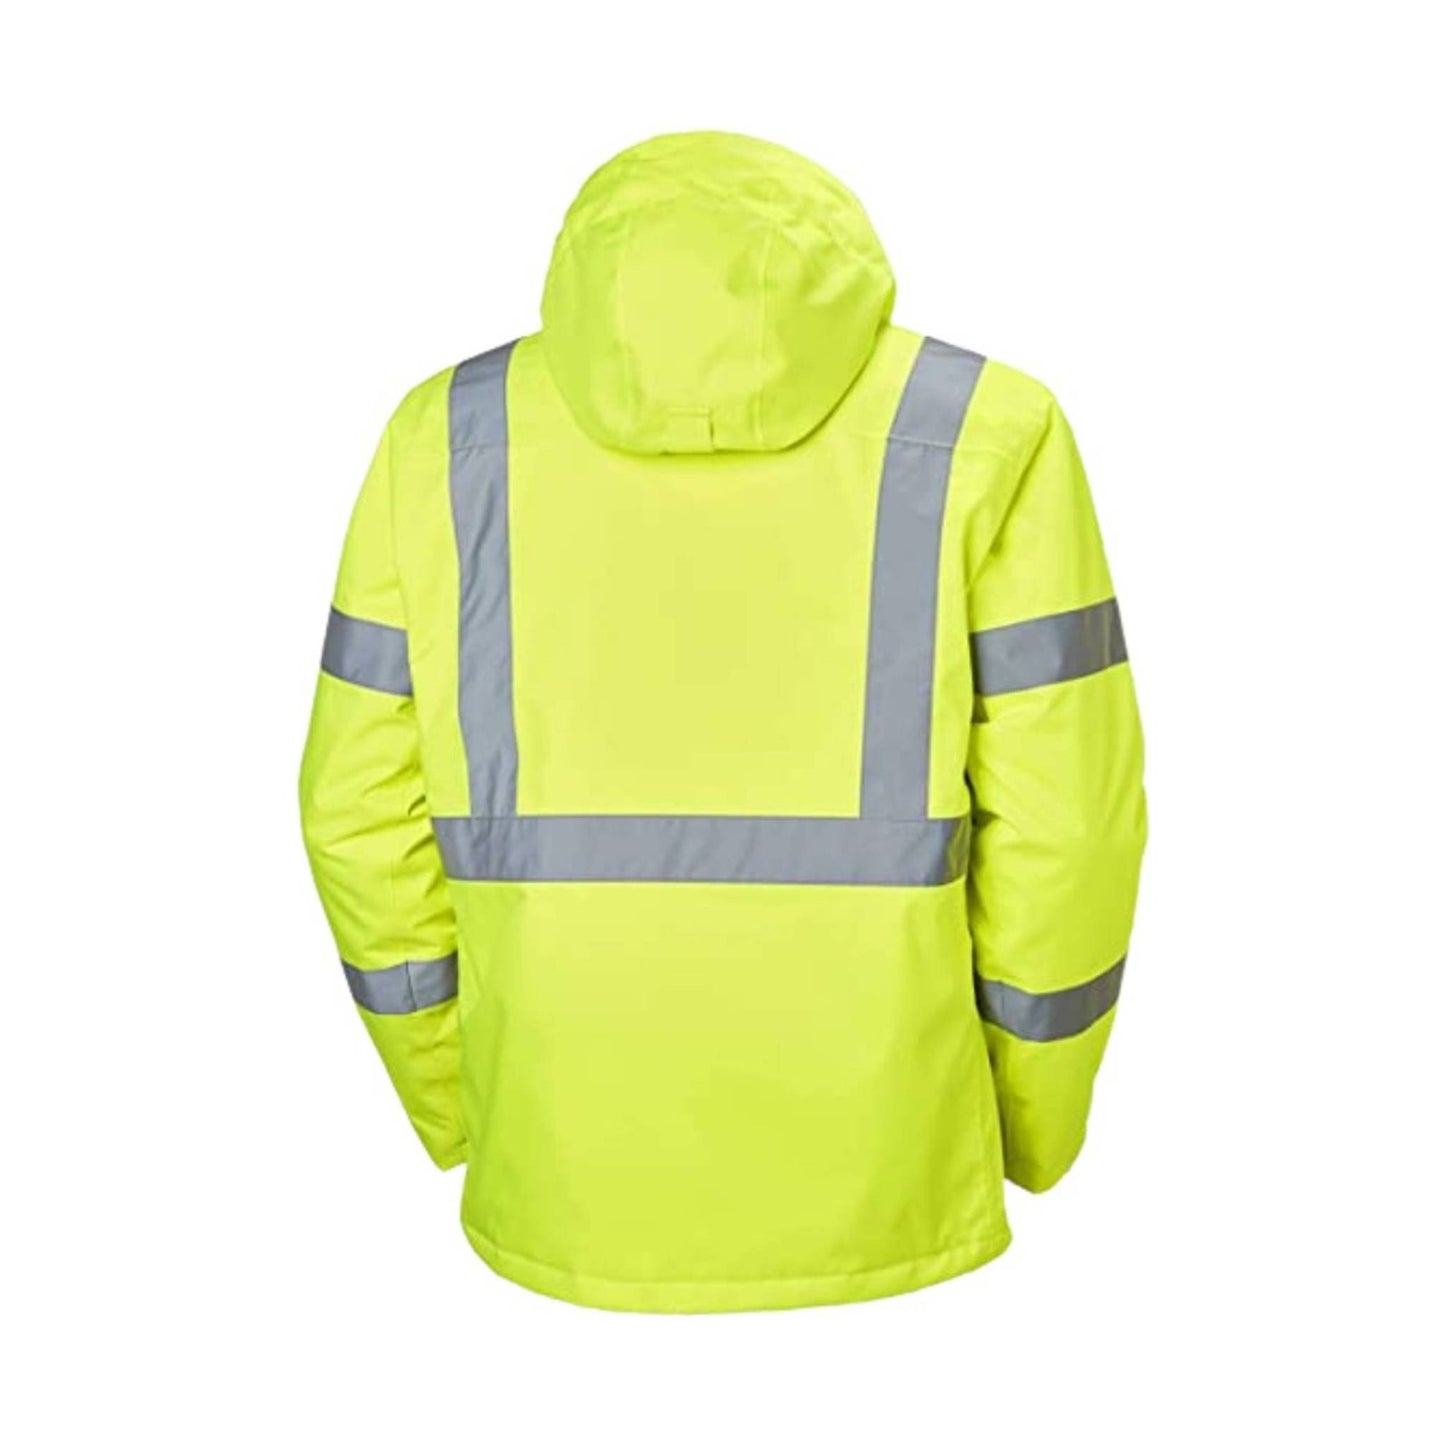 Helly Hansen Men's Alta Winter Jacket - Yellow/Charcoal